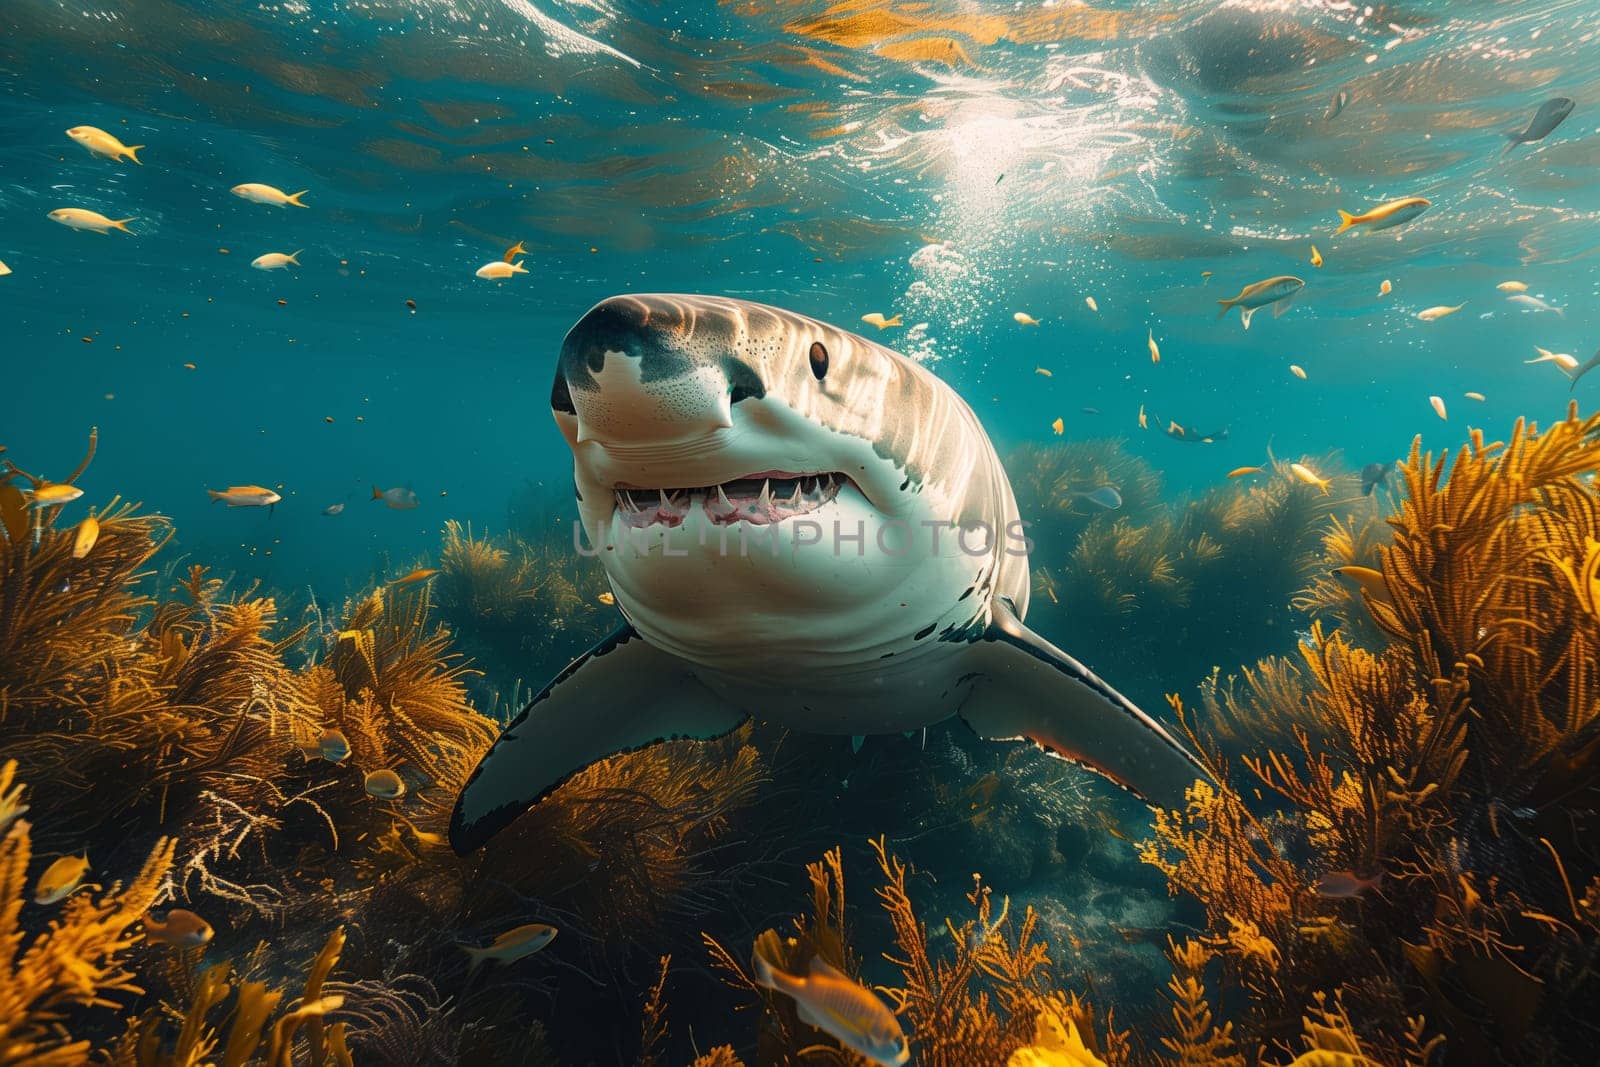 A Lamnidae shark swims underwater near seaweed in marine biology by richwolf